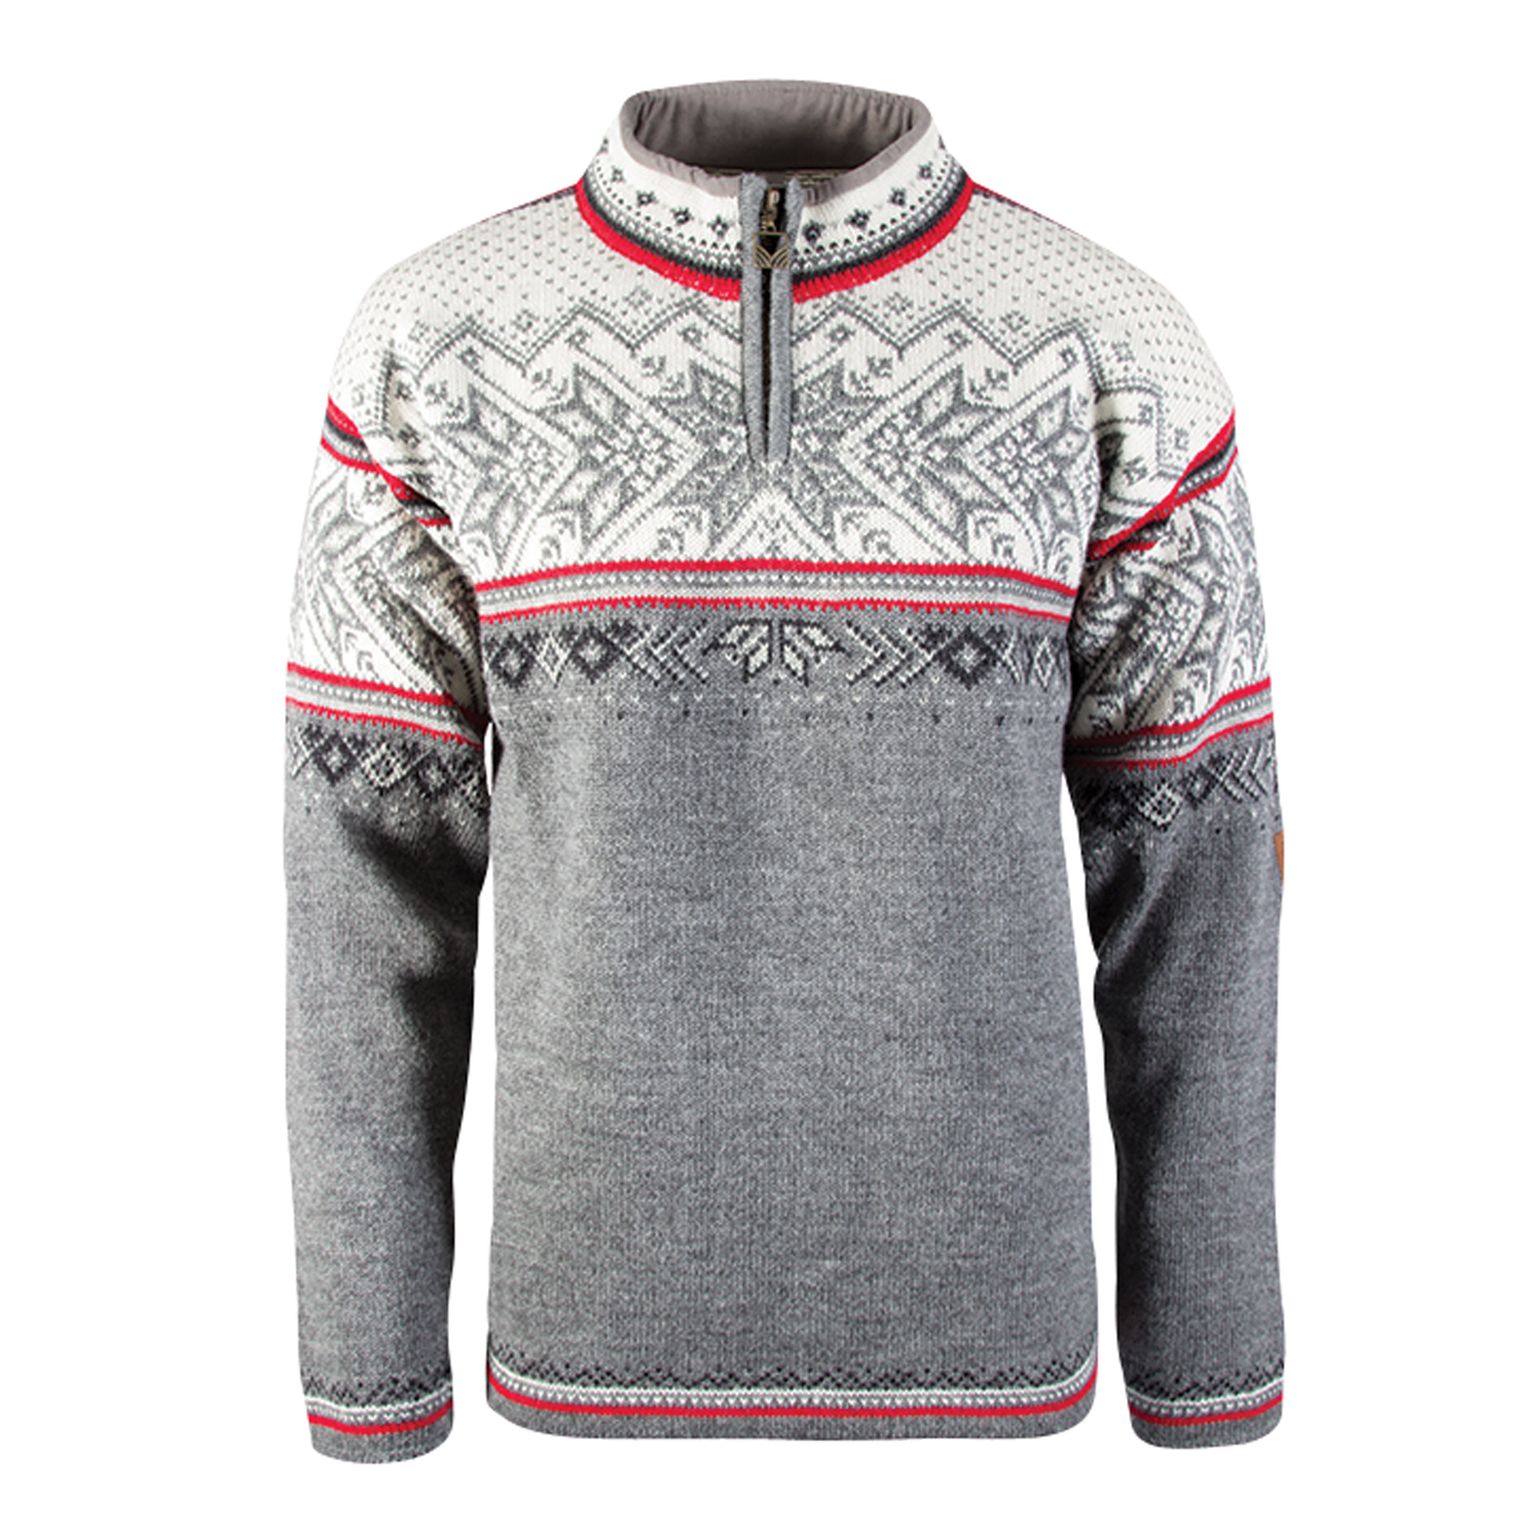 Men's Vail Sweater Smoke/Raspberry/Off white/Dark charcoal/Light charcoal